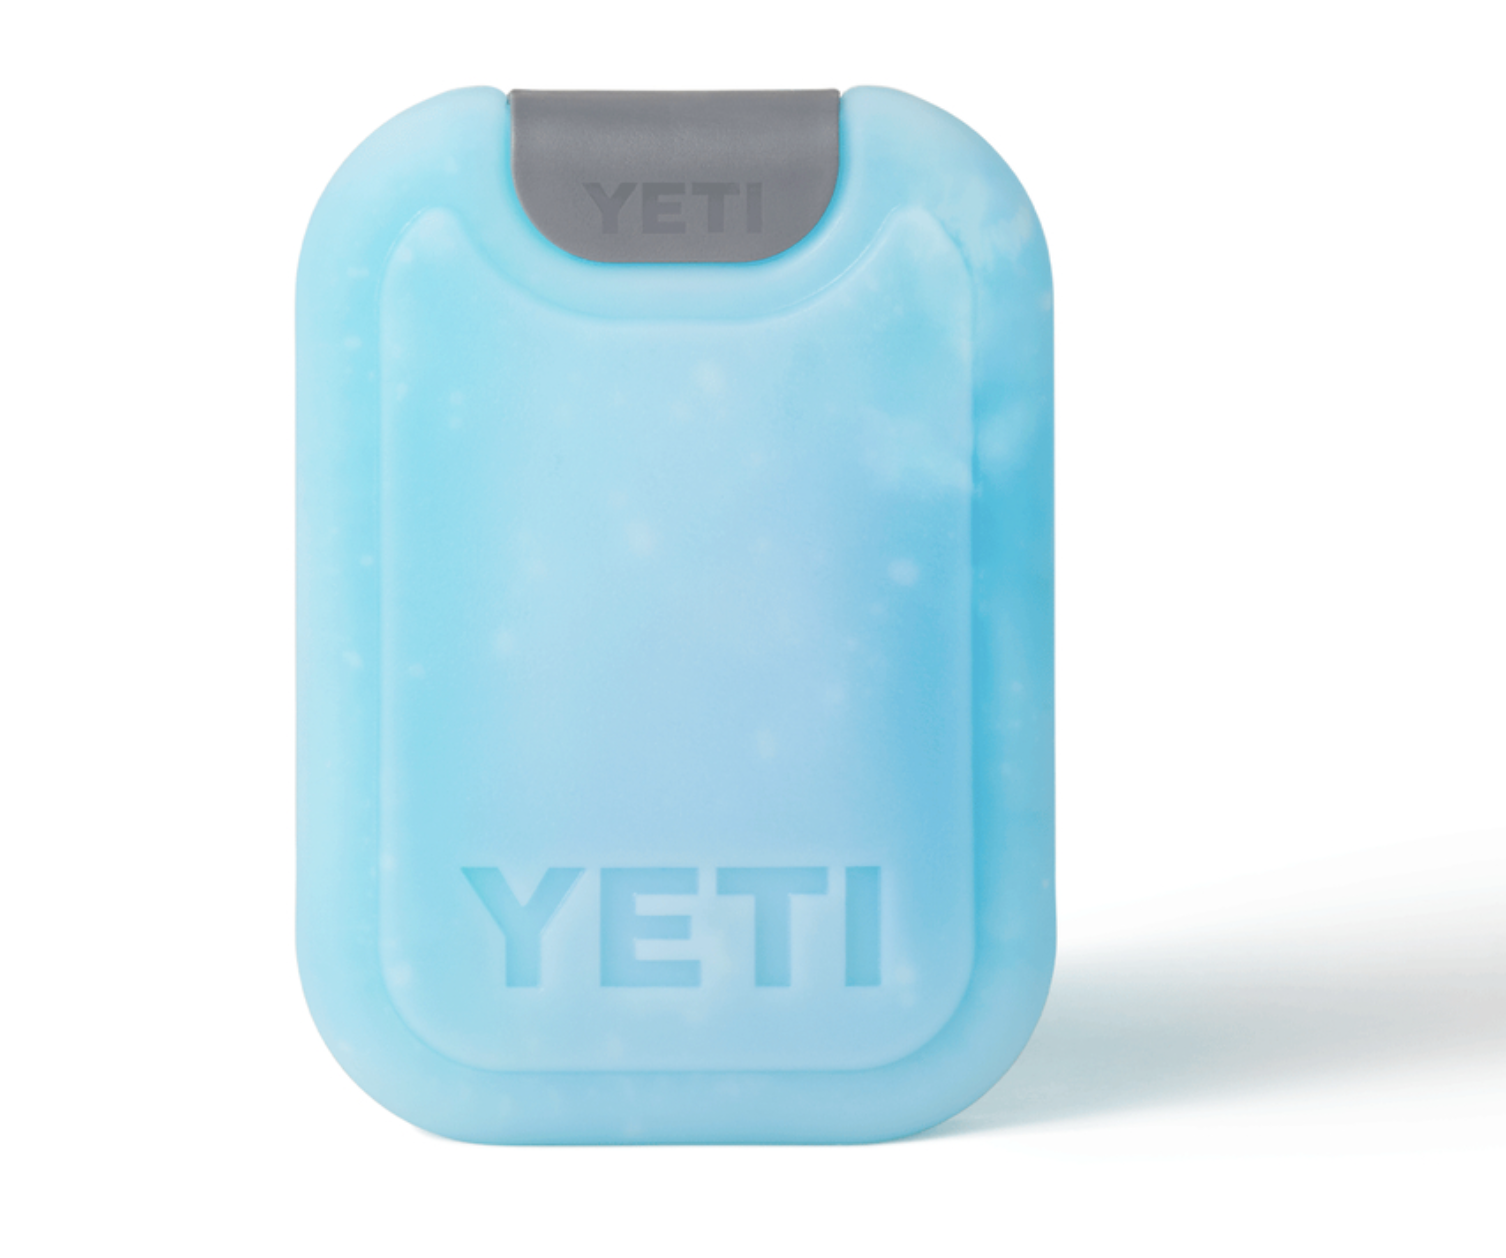 Yeti Thin Ice Medium - The Gadget Company